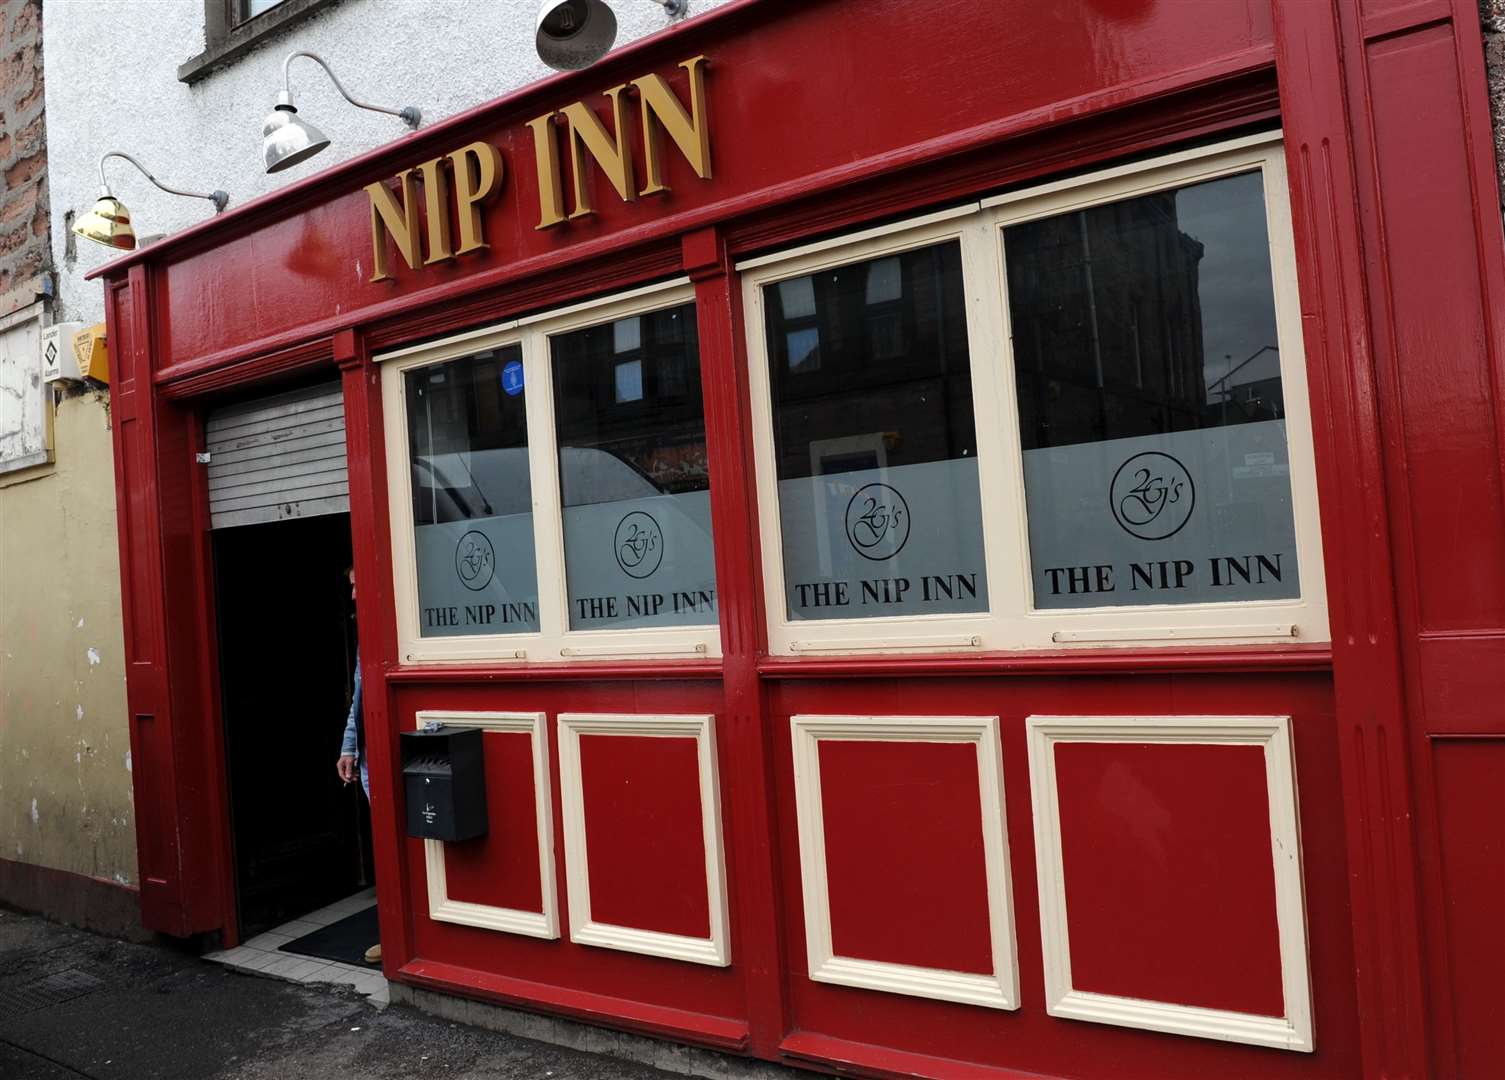 The attack happened outside the Nip Inn.